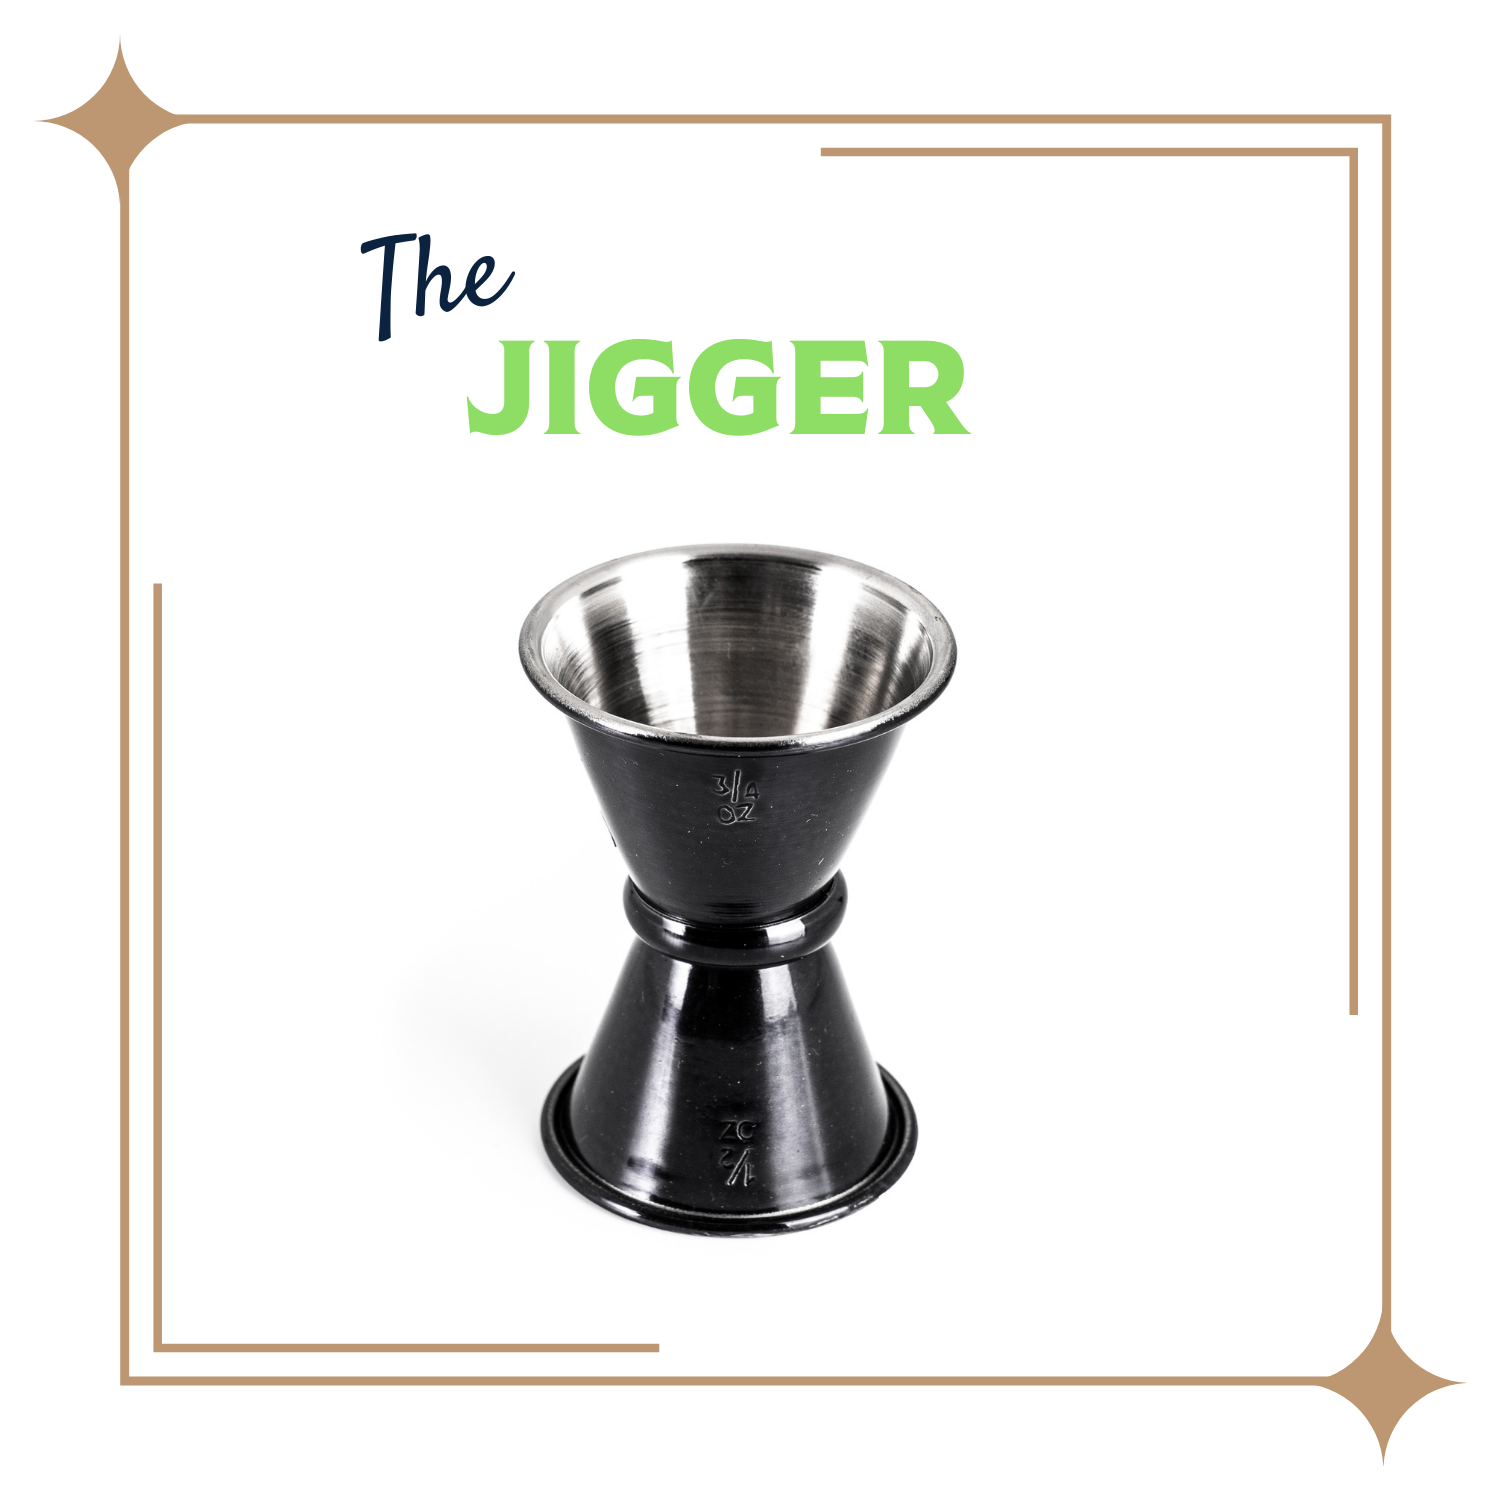 The Jigger